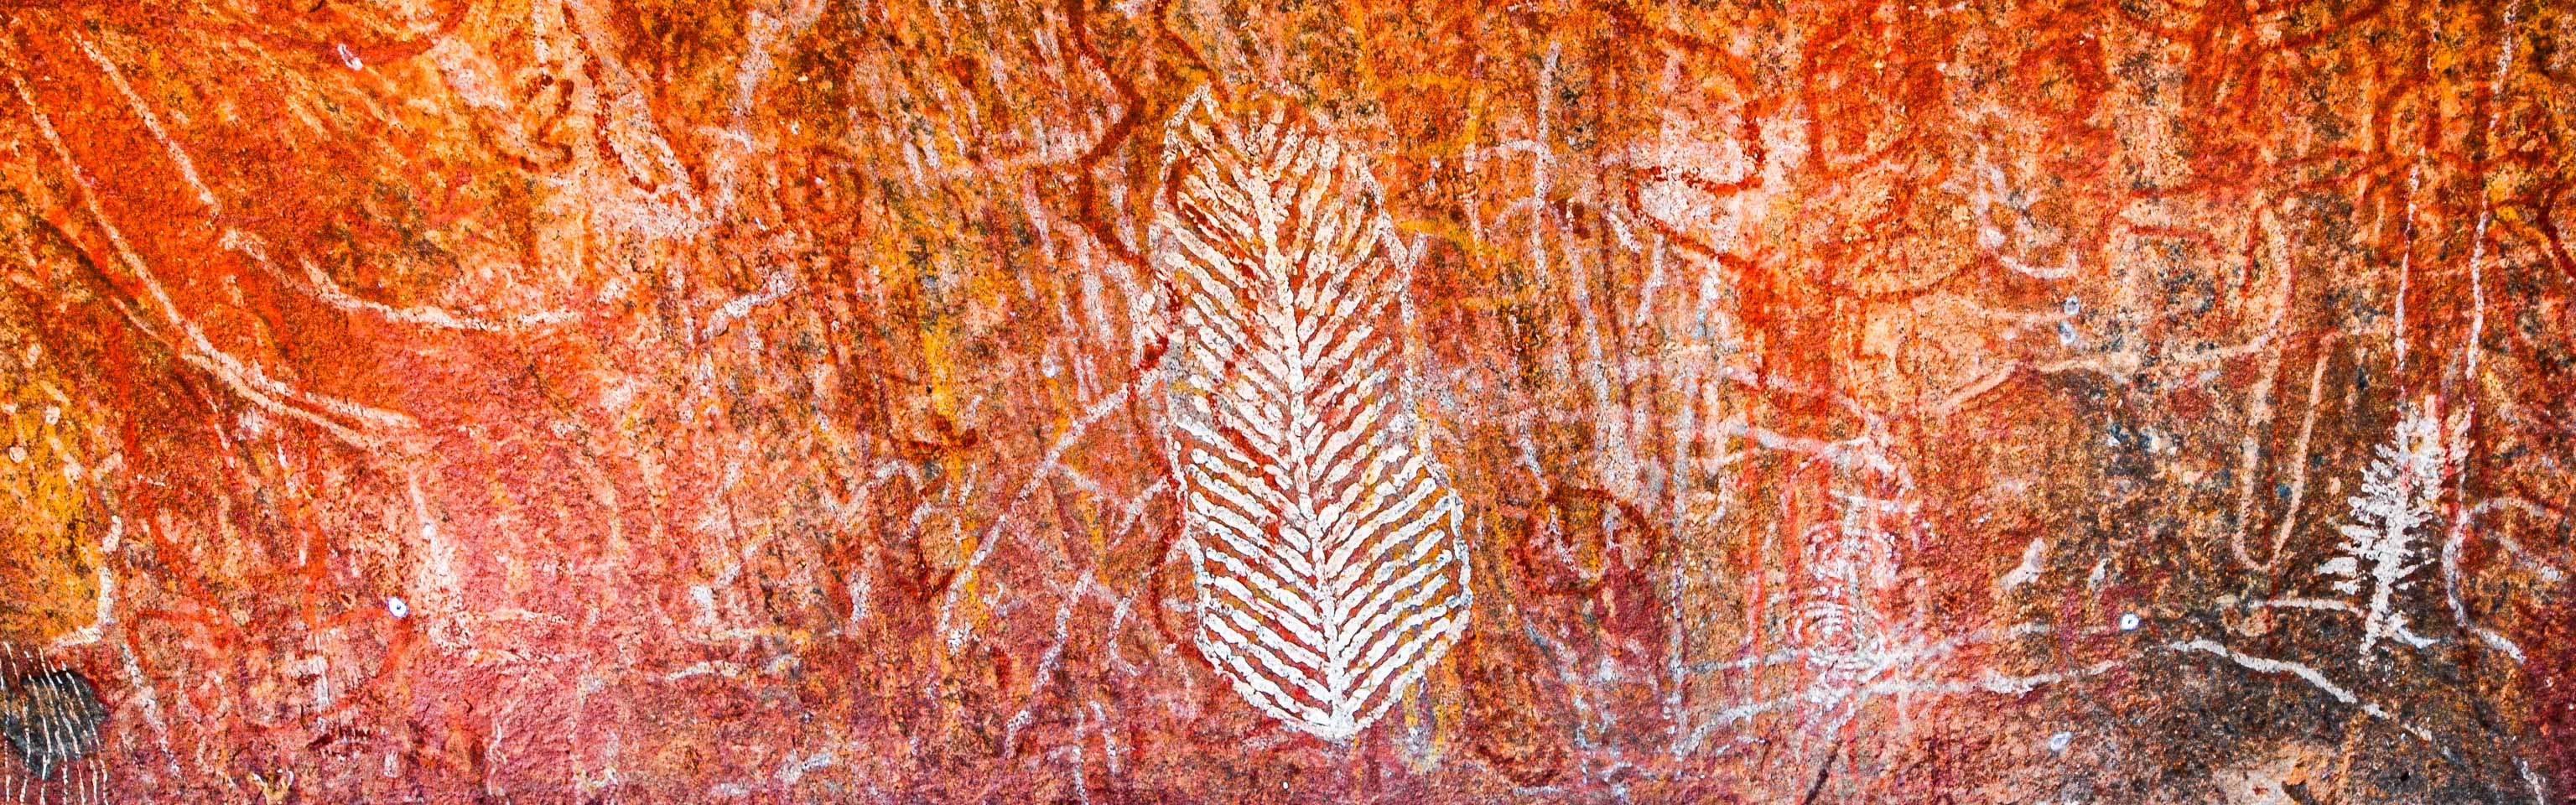 Rock paintings, Uluru, Australia